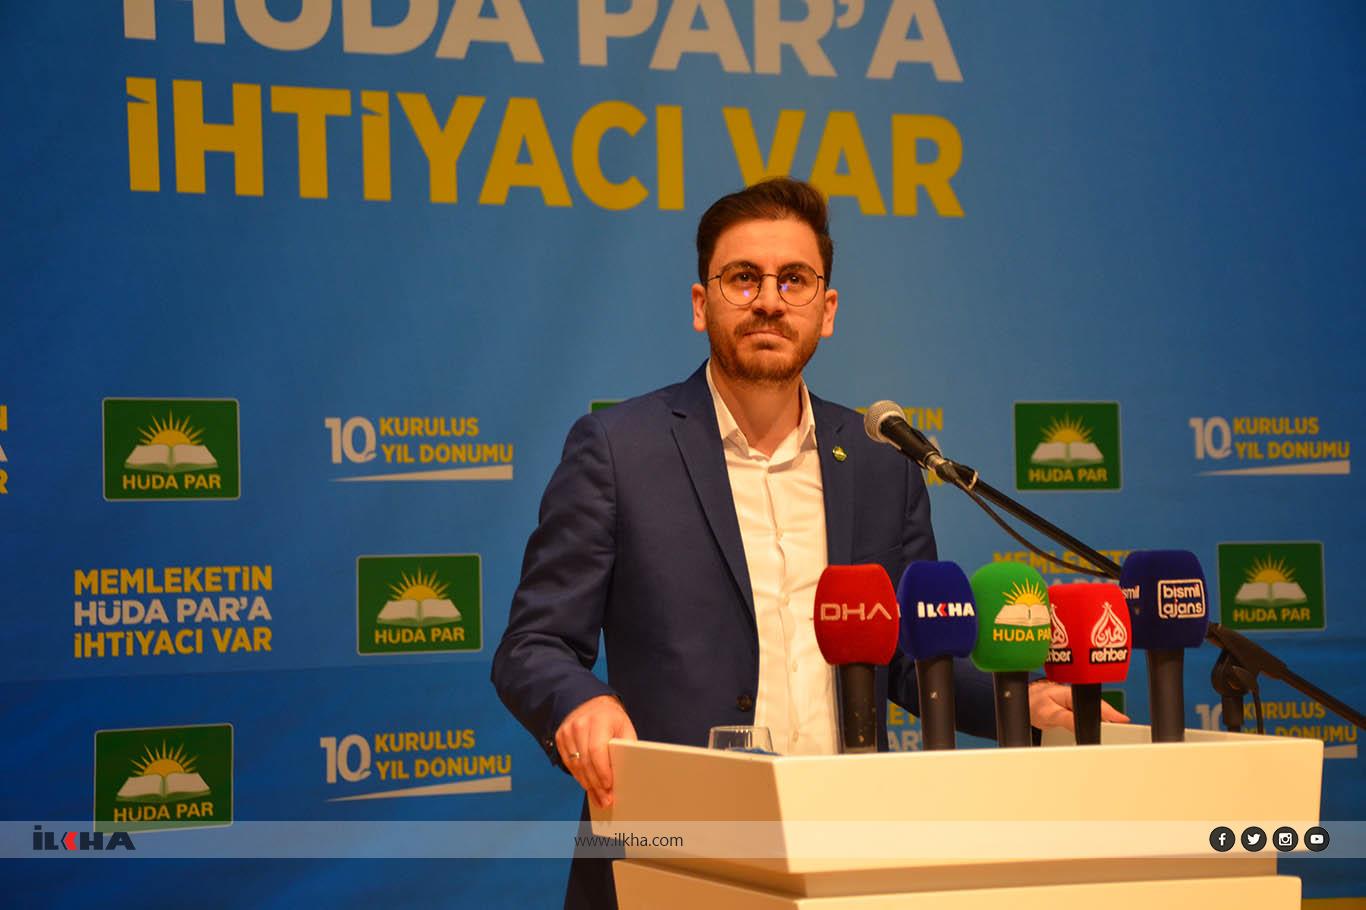 HÜDA PAR calls for change to Turkey’s education system